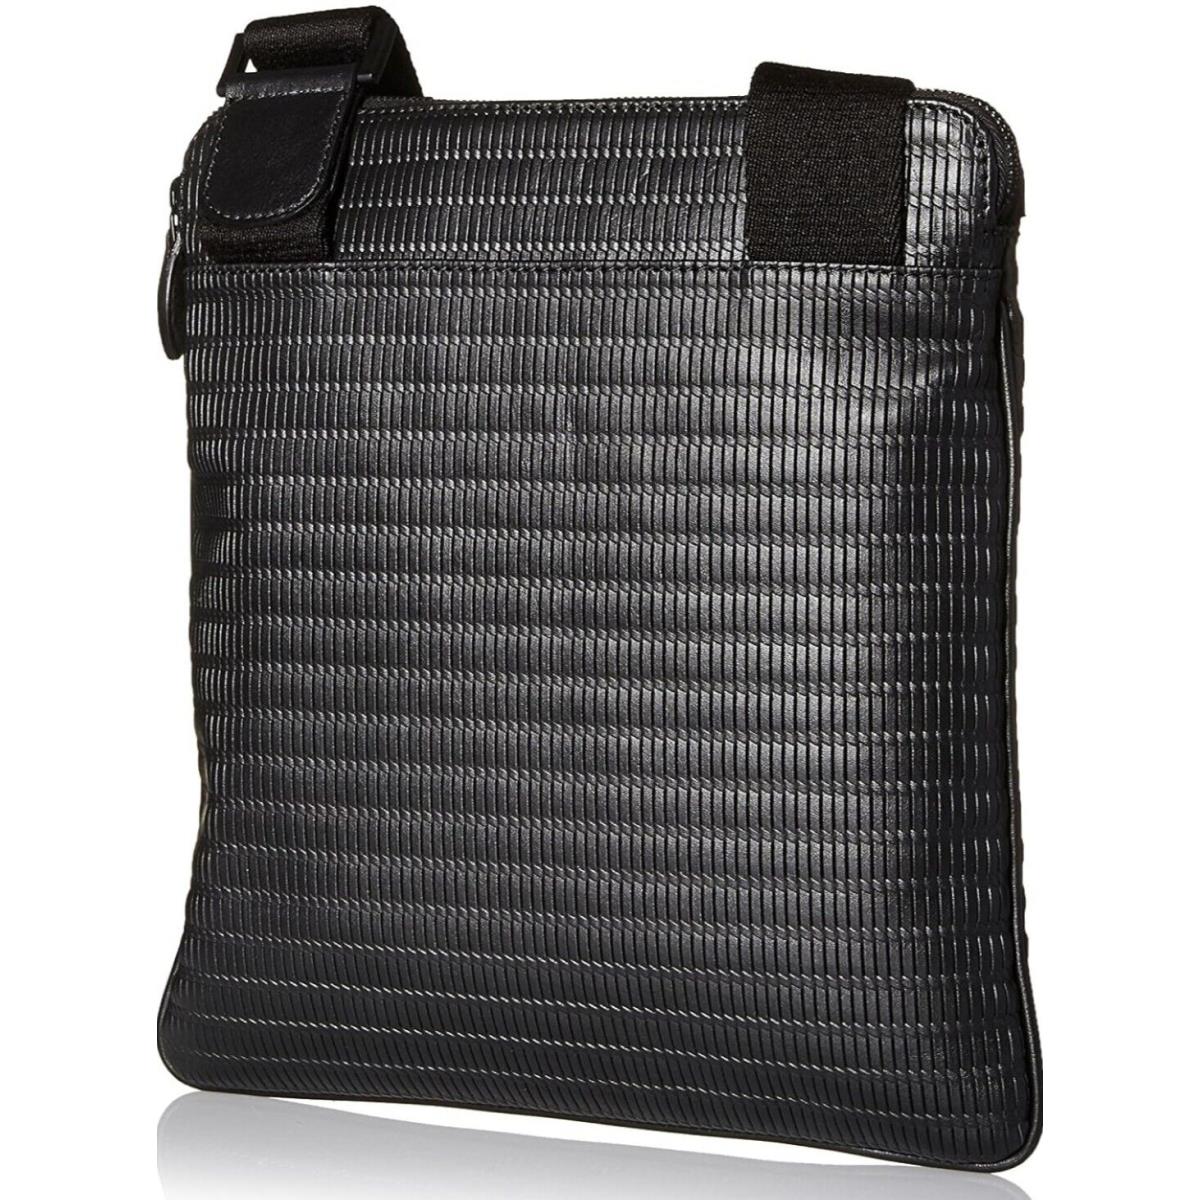 Emporio Armani Crossbody Messenger Leather Shoulder Bag Black with Dust Bag